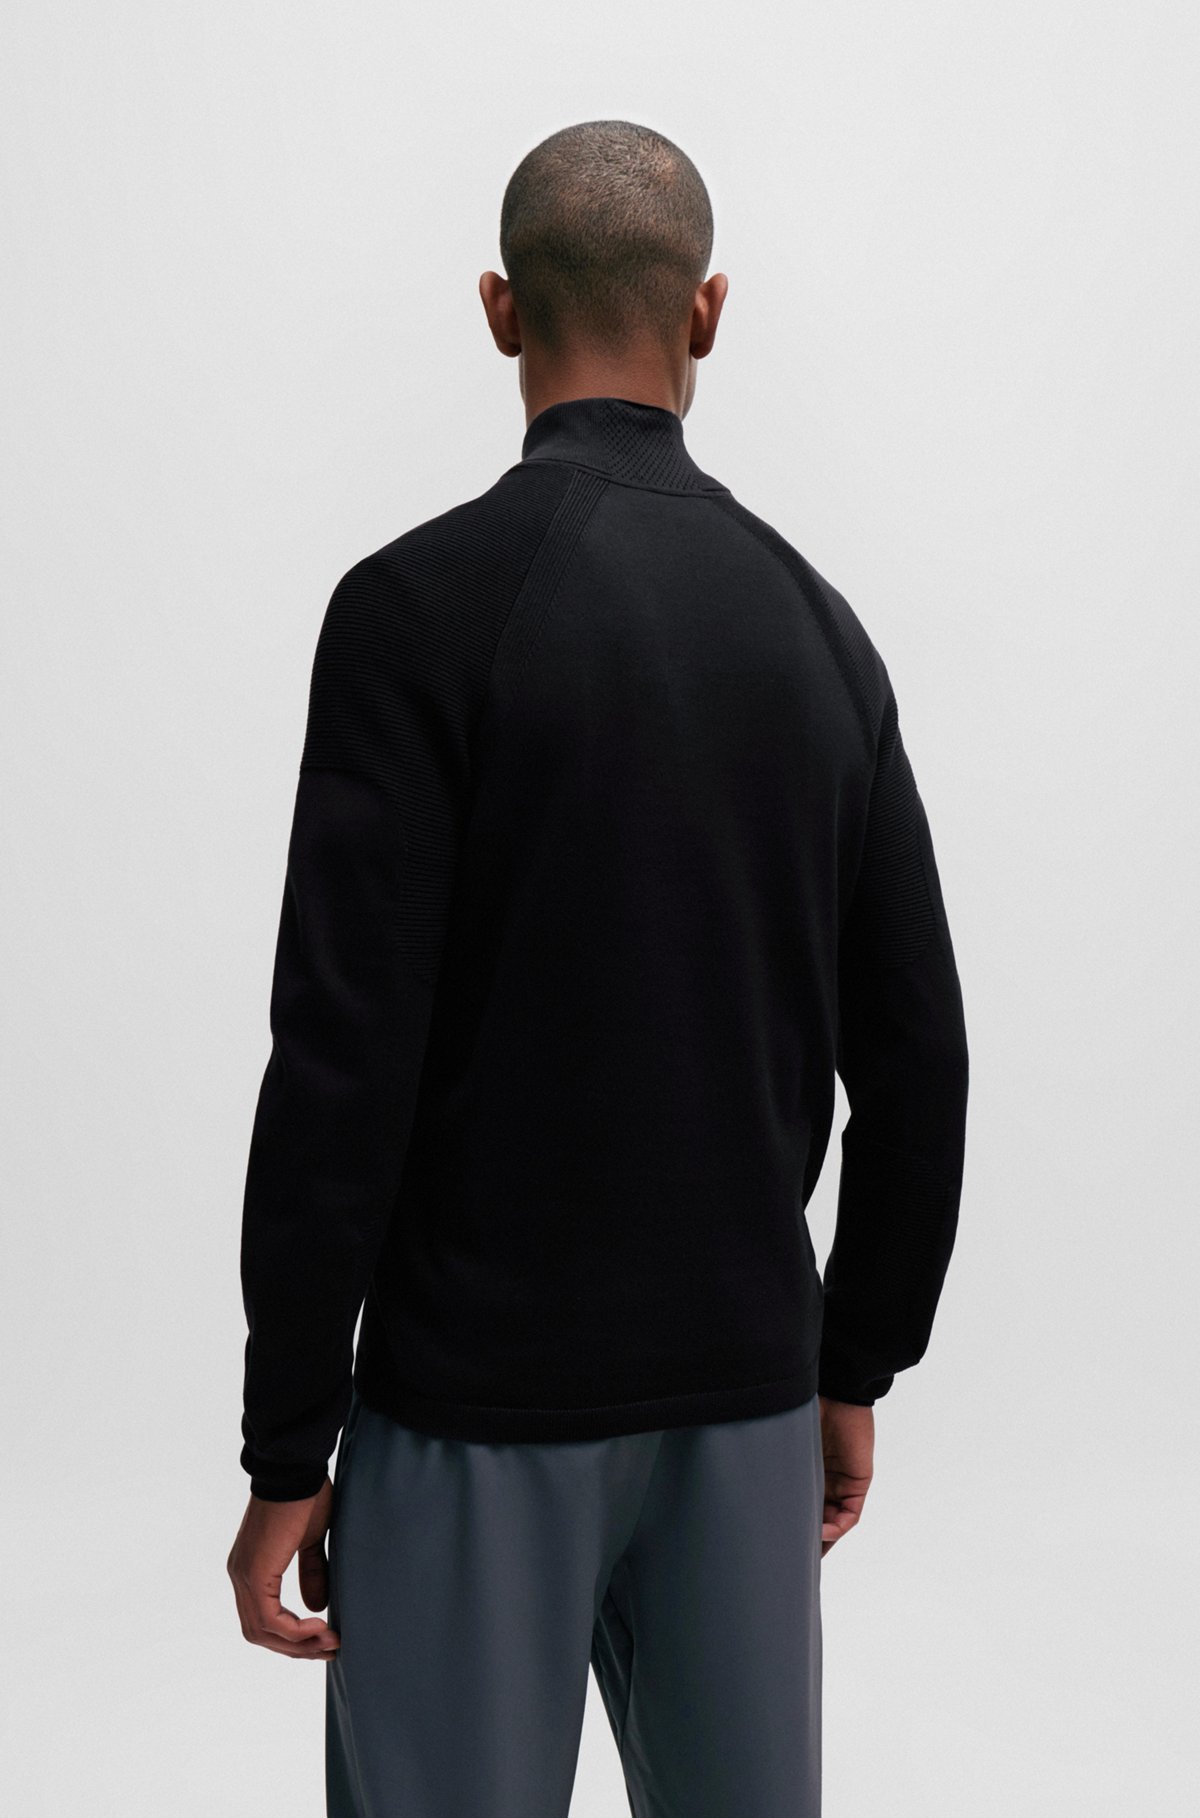 Cotton-blend zip-neck sweater with logo detail, Black